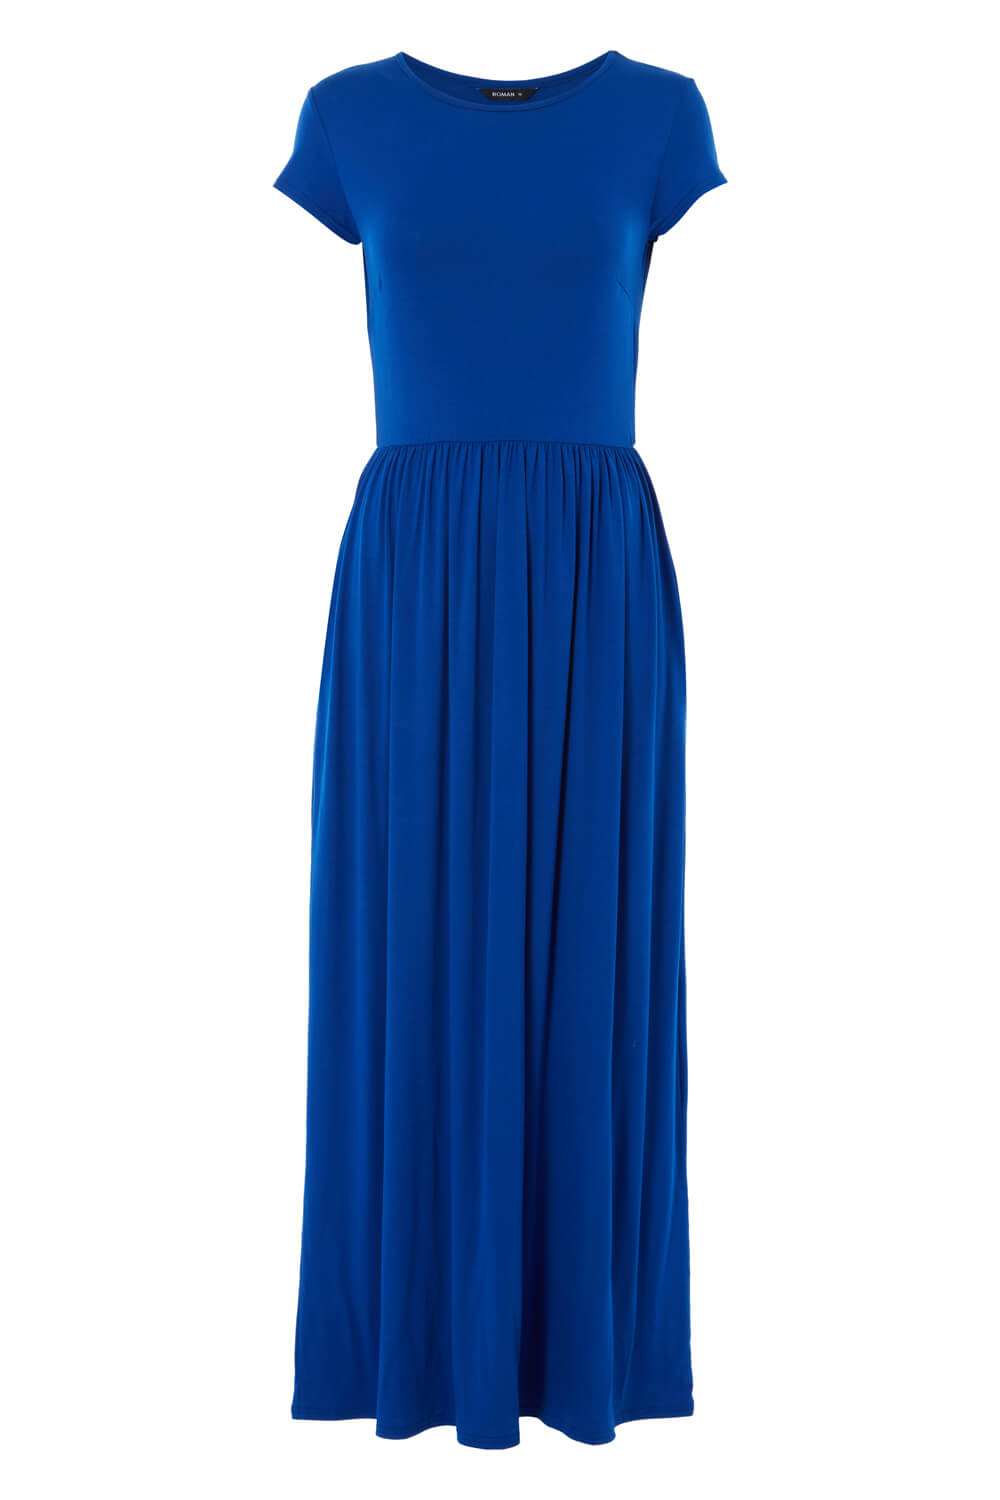 Gathered Skirt Maxi Dress in Royal Blue - Roman Originals UK